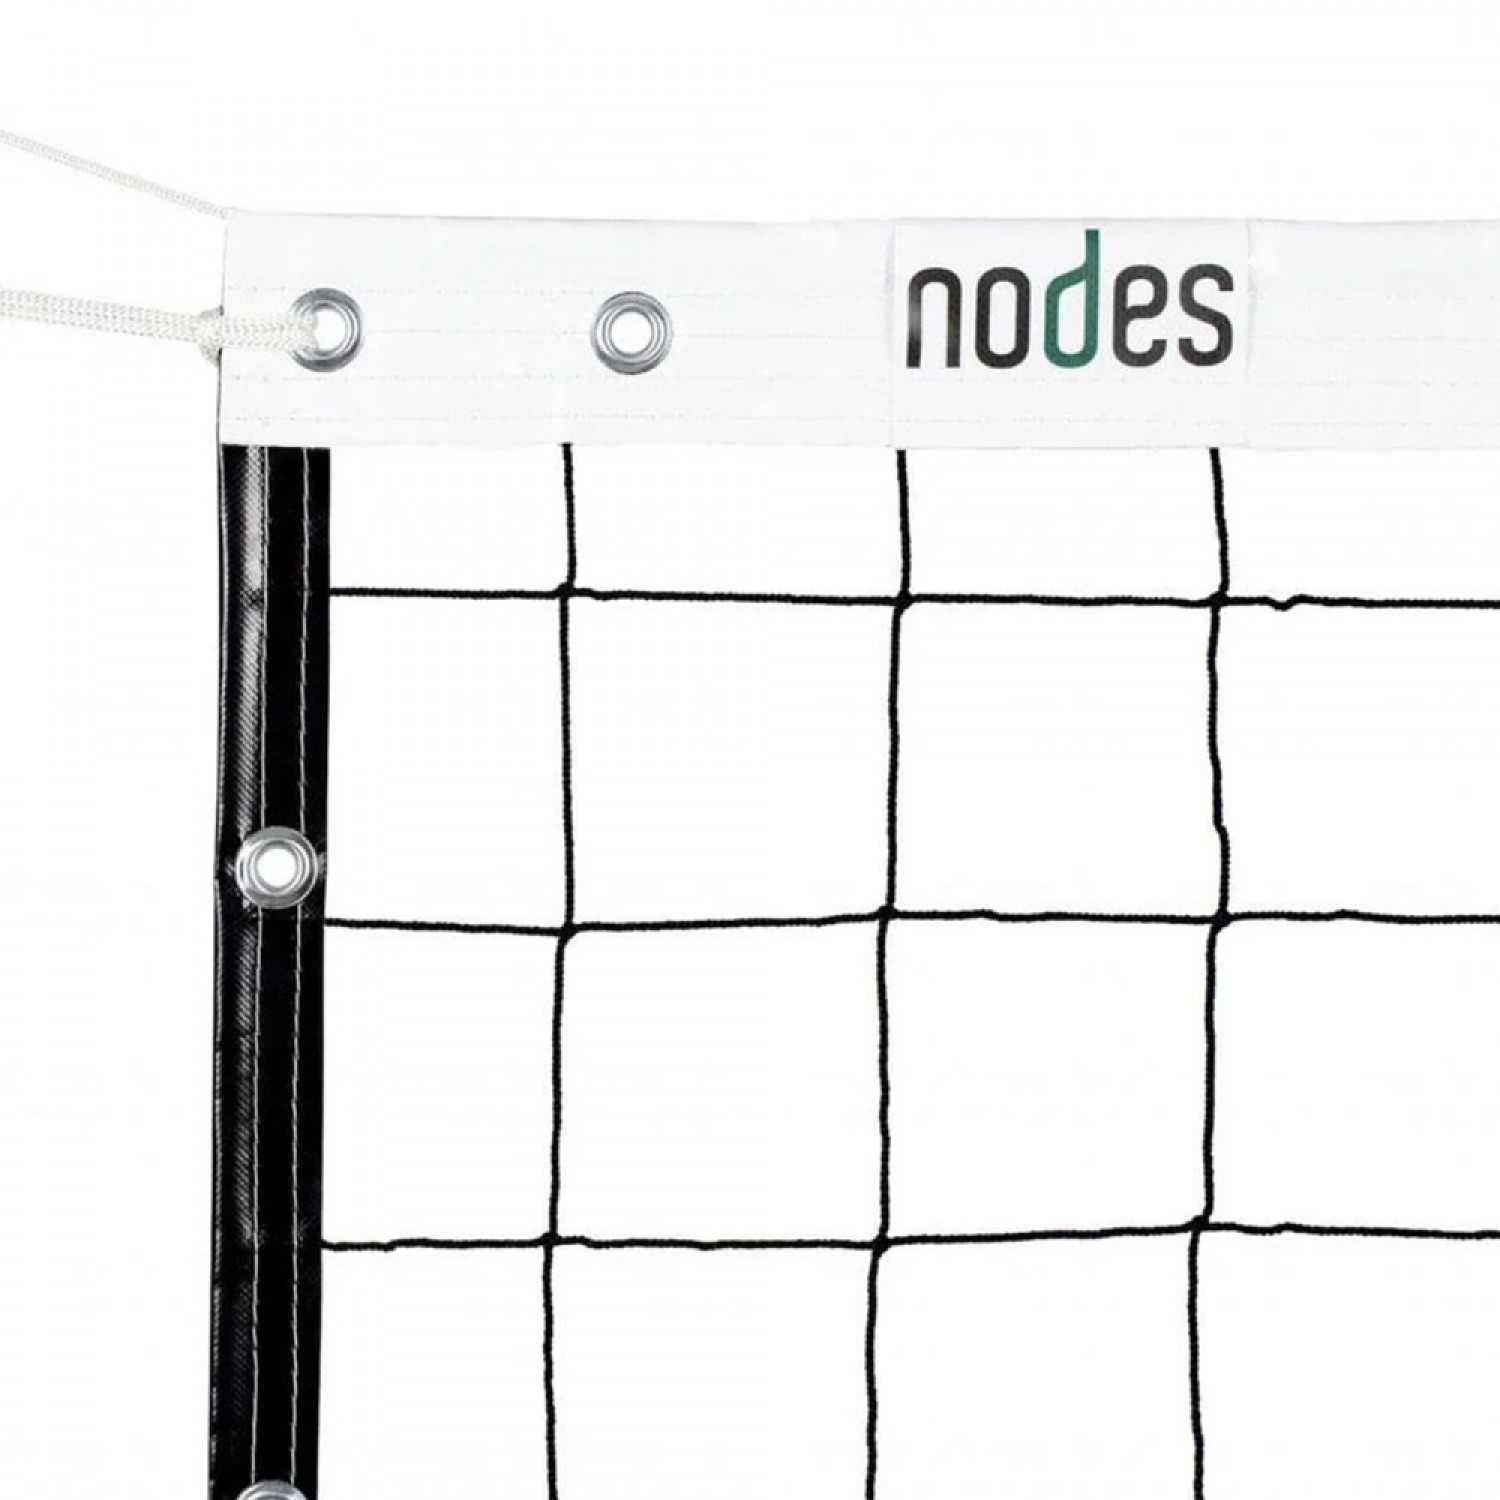 Nodes Semi-Professional Volleyball Net